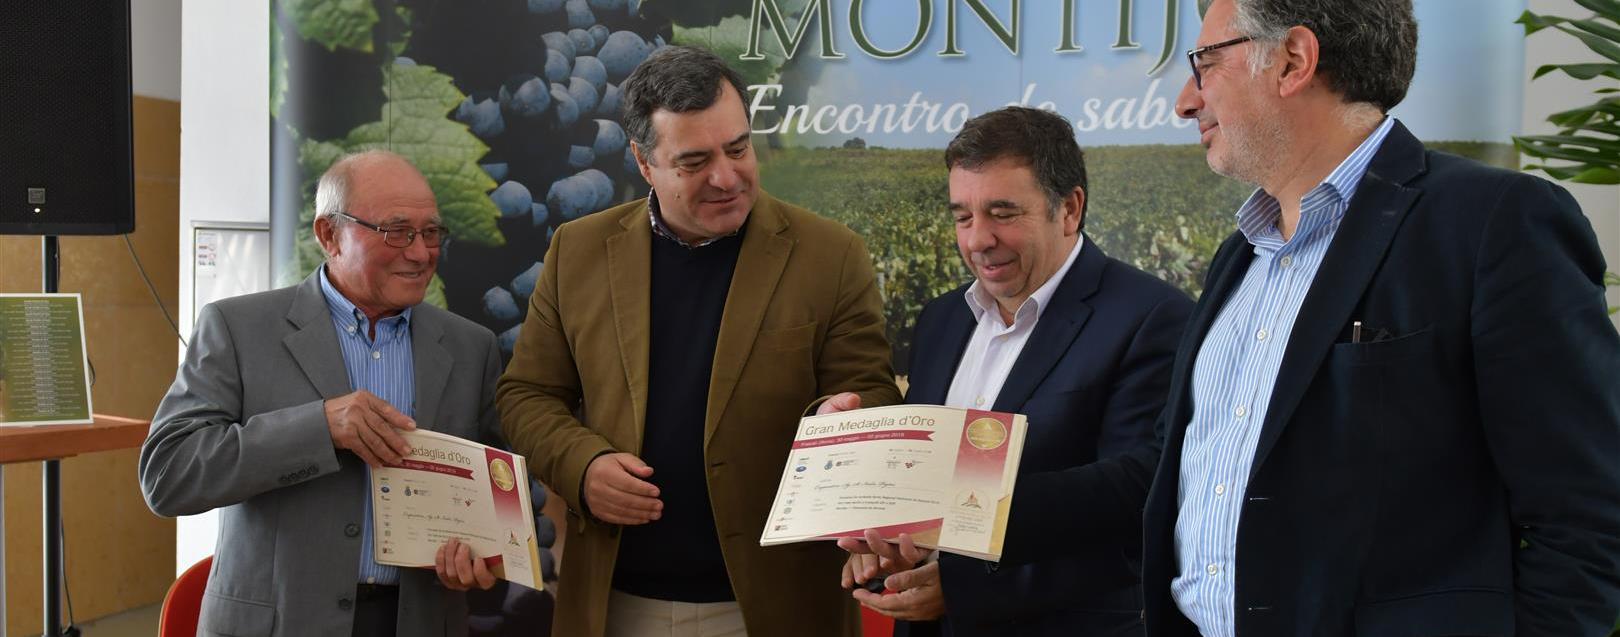 Adega de Pegões recebe 18 medalhas do concurso  “La Città del Vino” (c/vídeo)